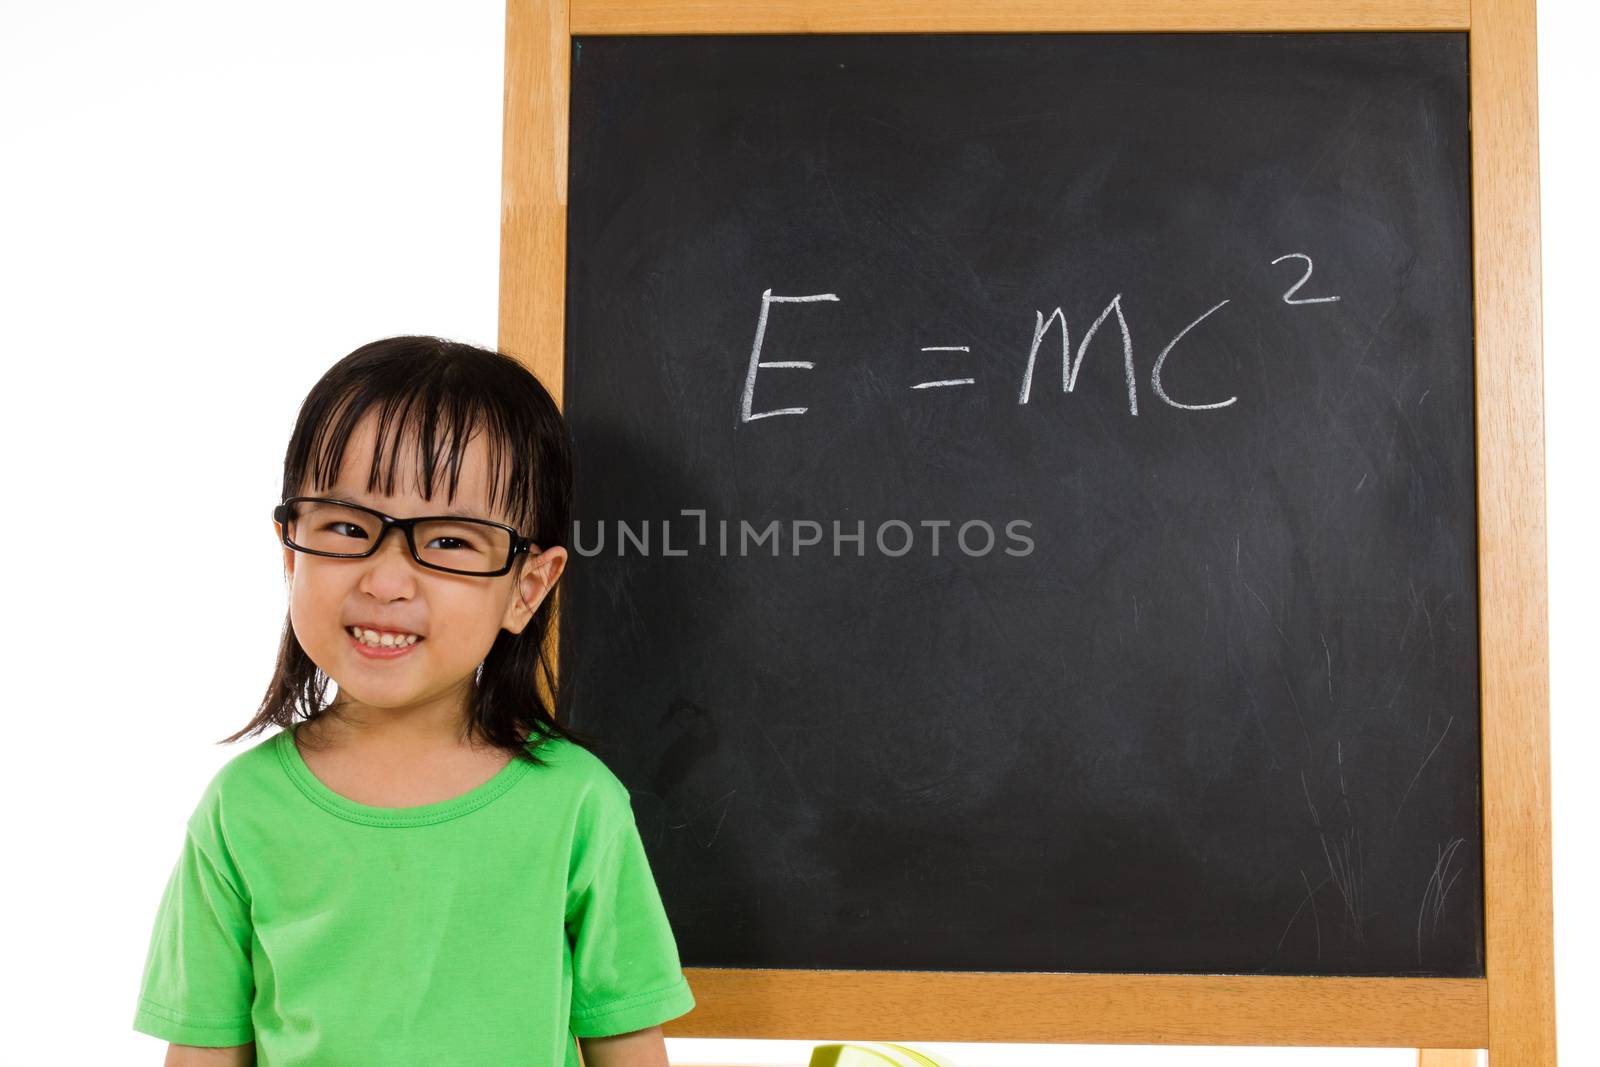 Asian Chinese little girl againts blackboard with formulas by kiankhoon